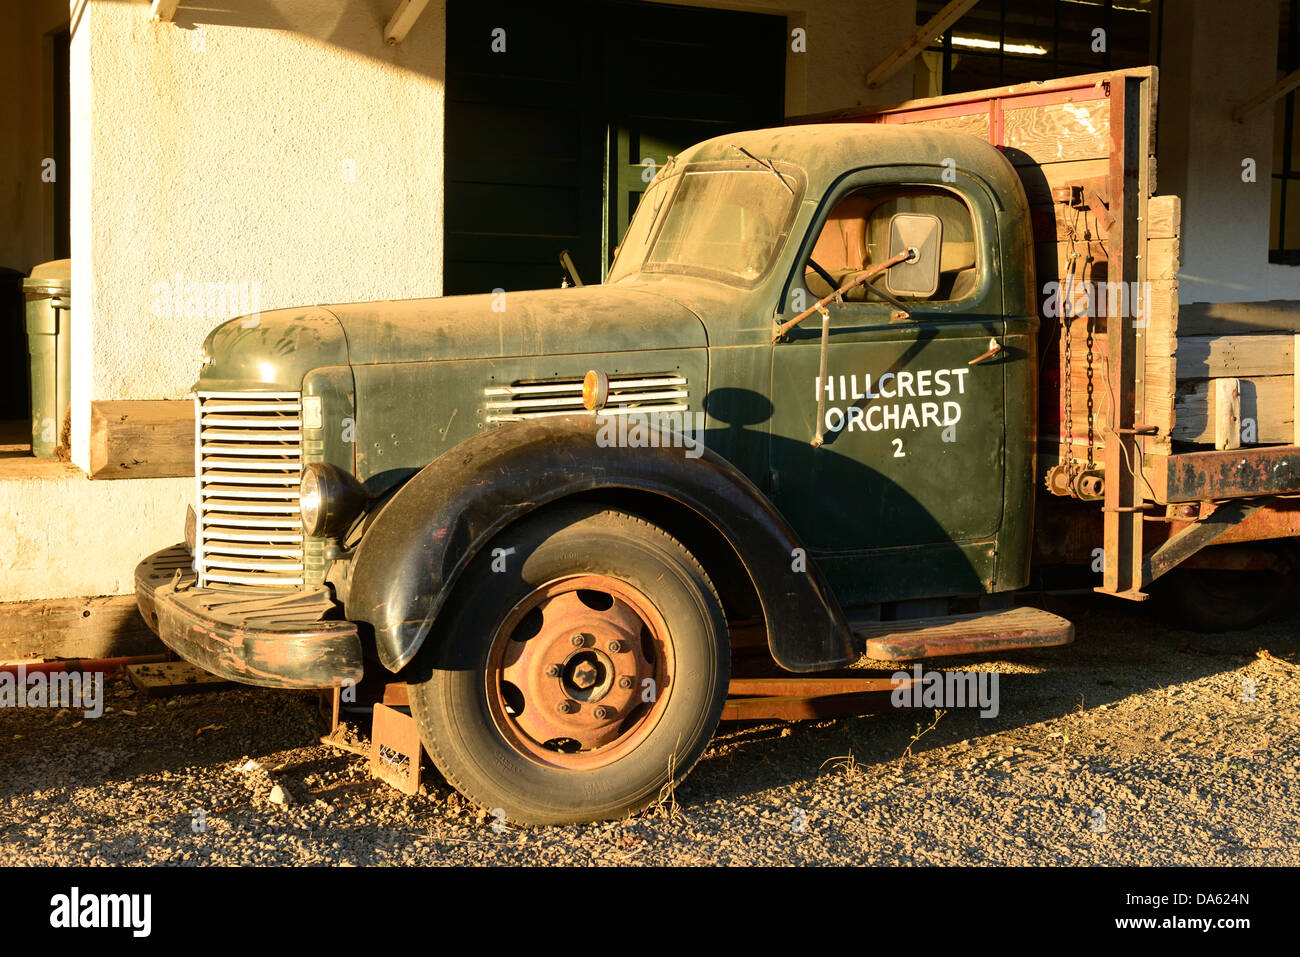 Truck, Roxy Ann, Winery, Medford, Oregon, USA, United States, America, Stock Photo